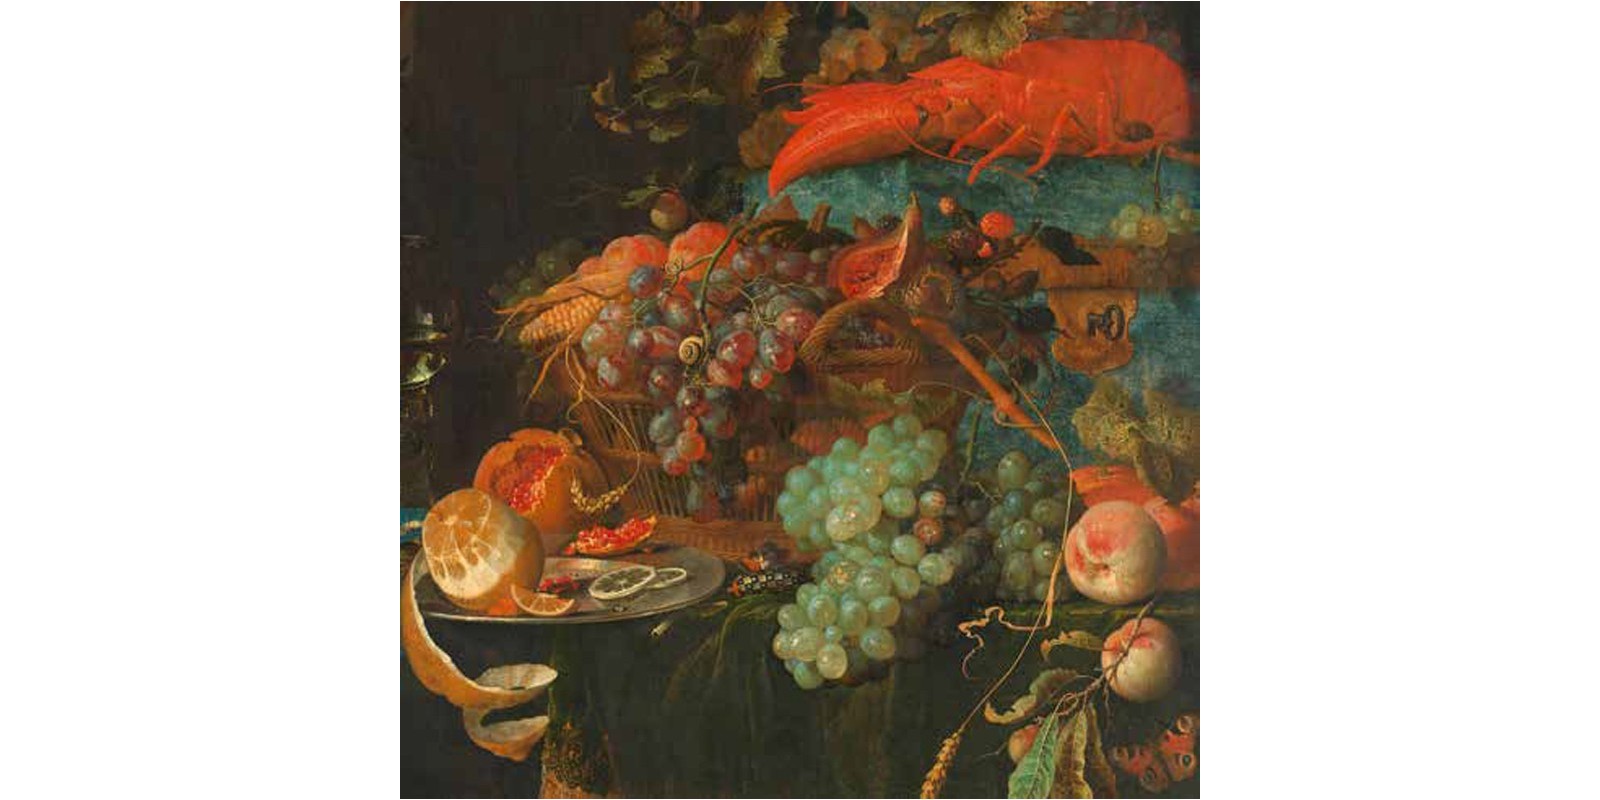 Abraham Mignon - Still Life with Fruit (detail)